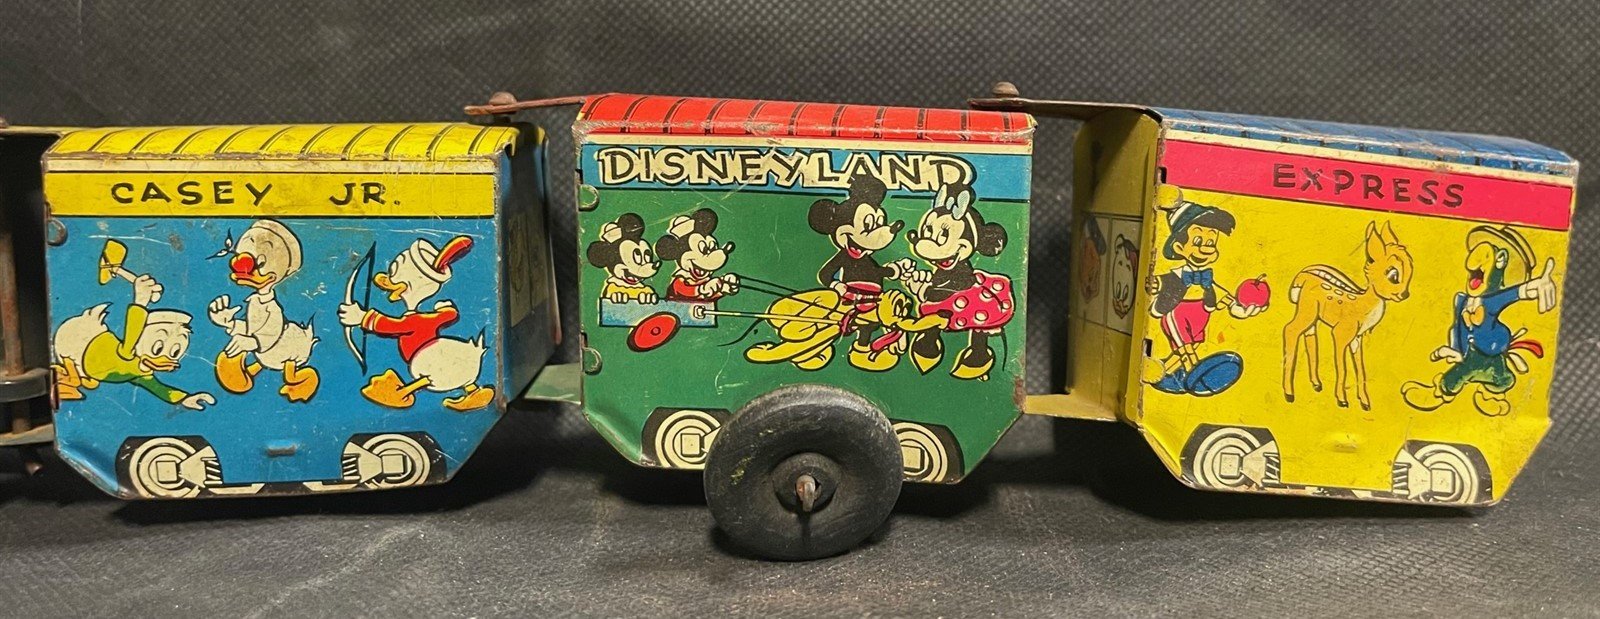 Vintage Casey JR Disney Land Express Marx Tin Toy Train